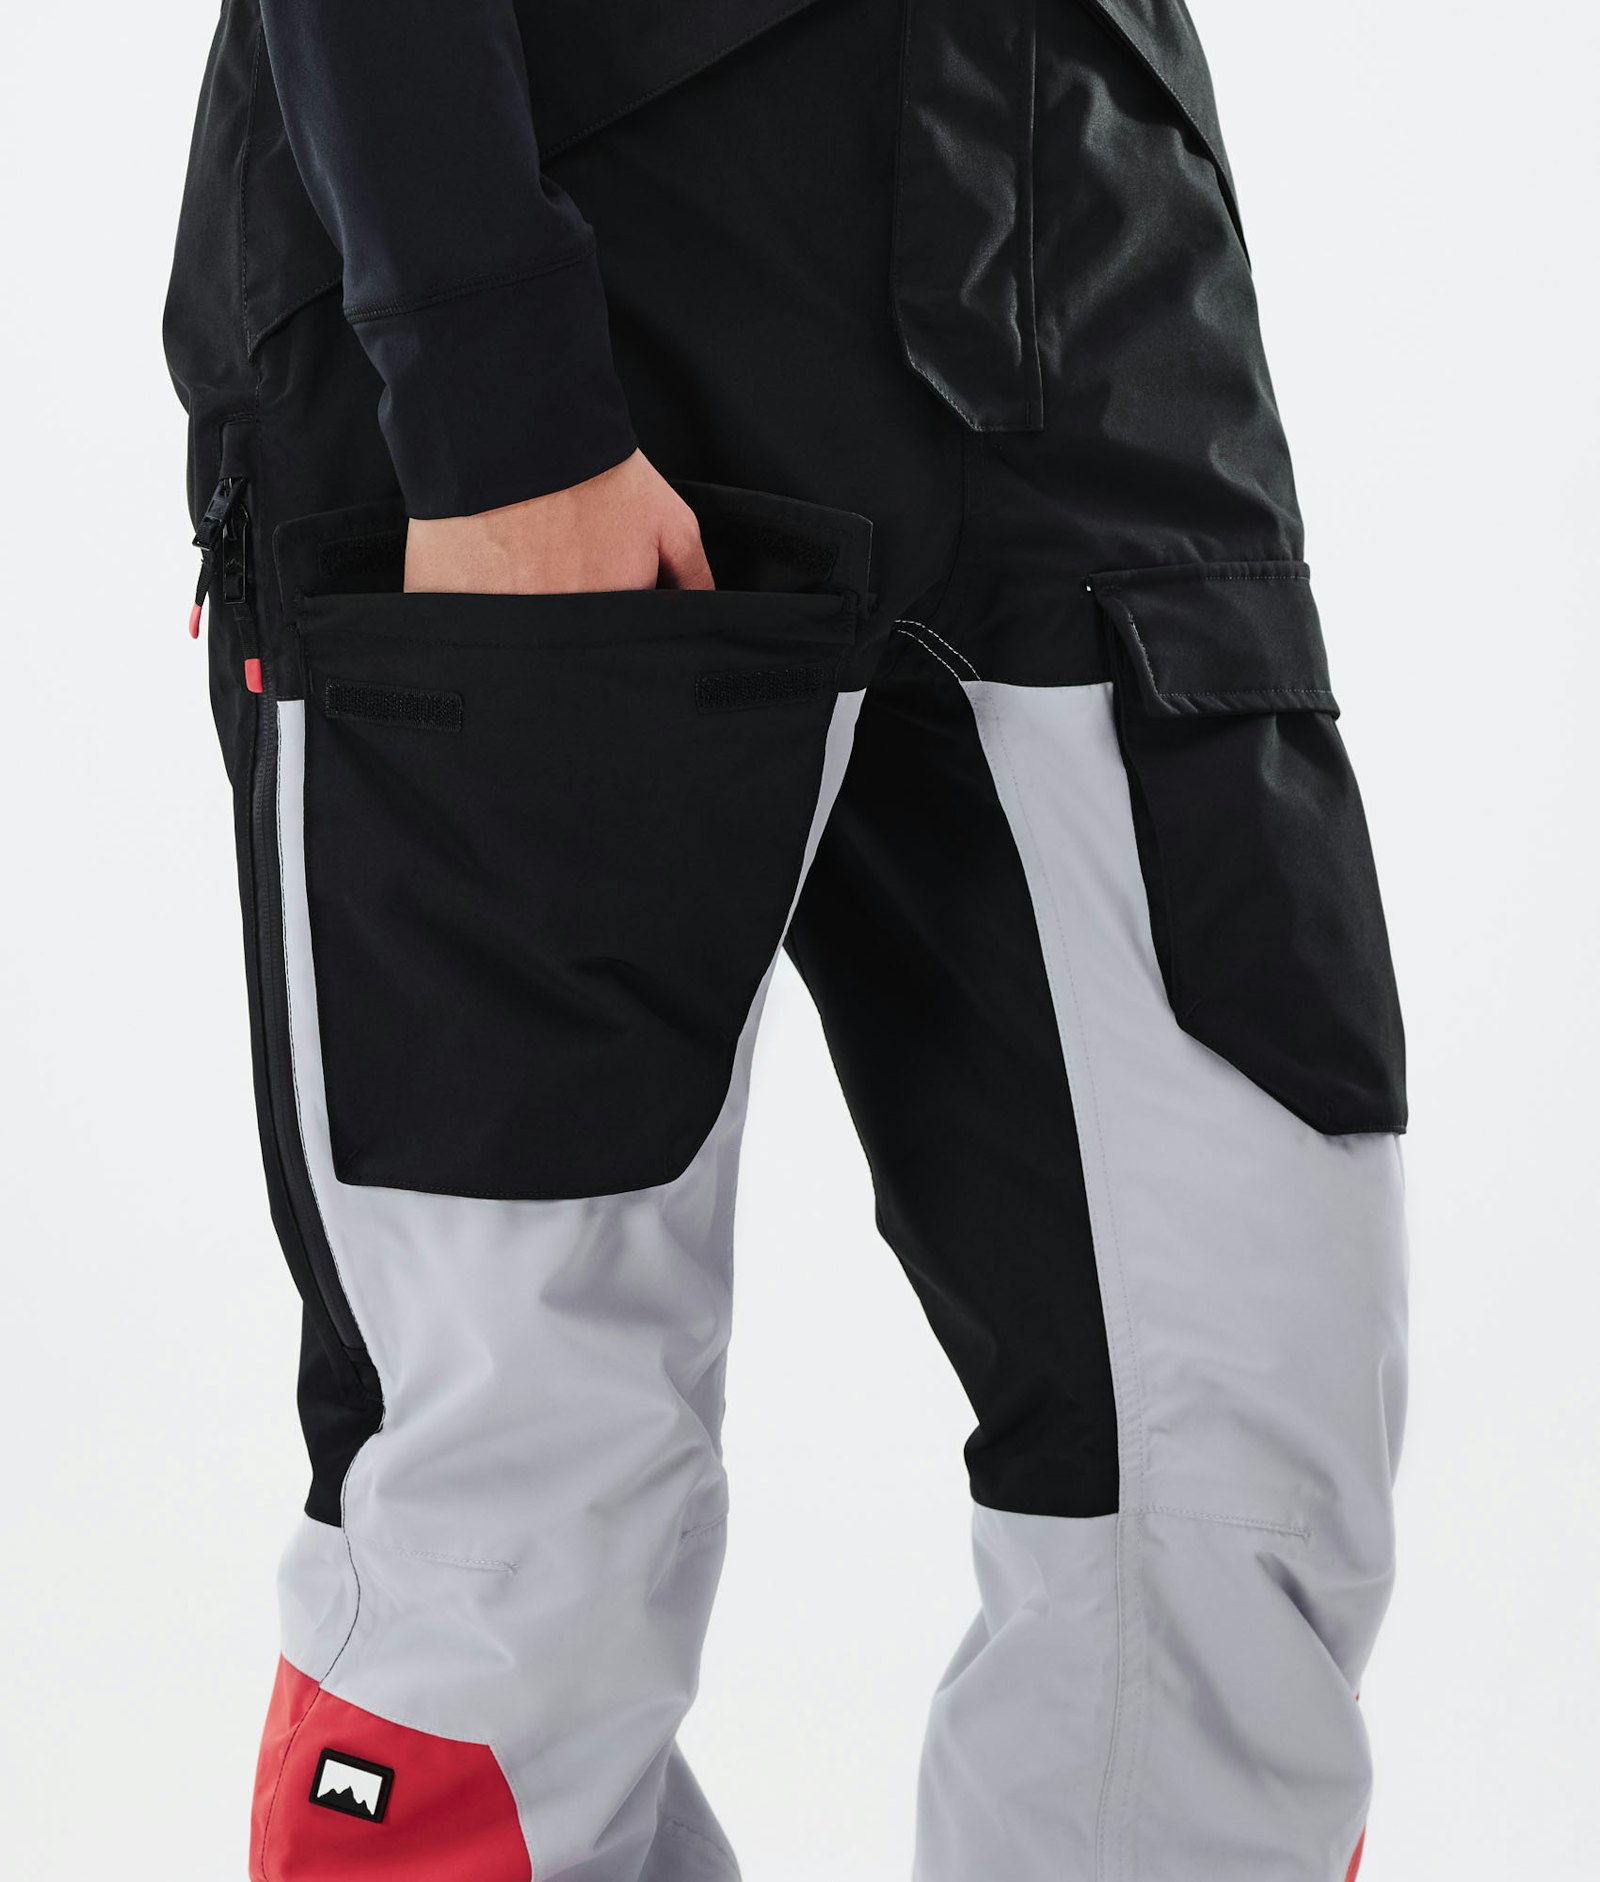 Montec Fawk W 2021 Snowboard Pants Women Black/Light Grey/Coral